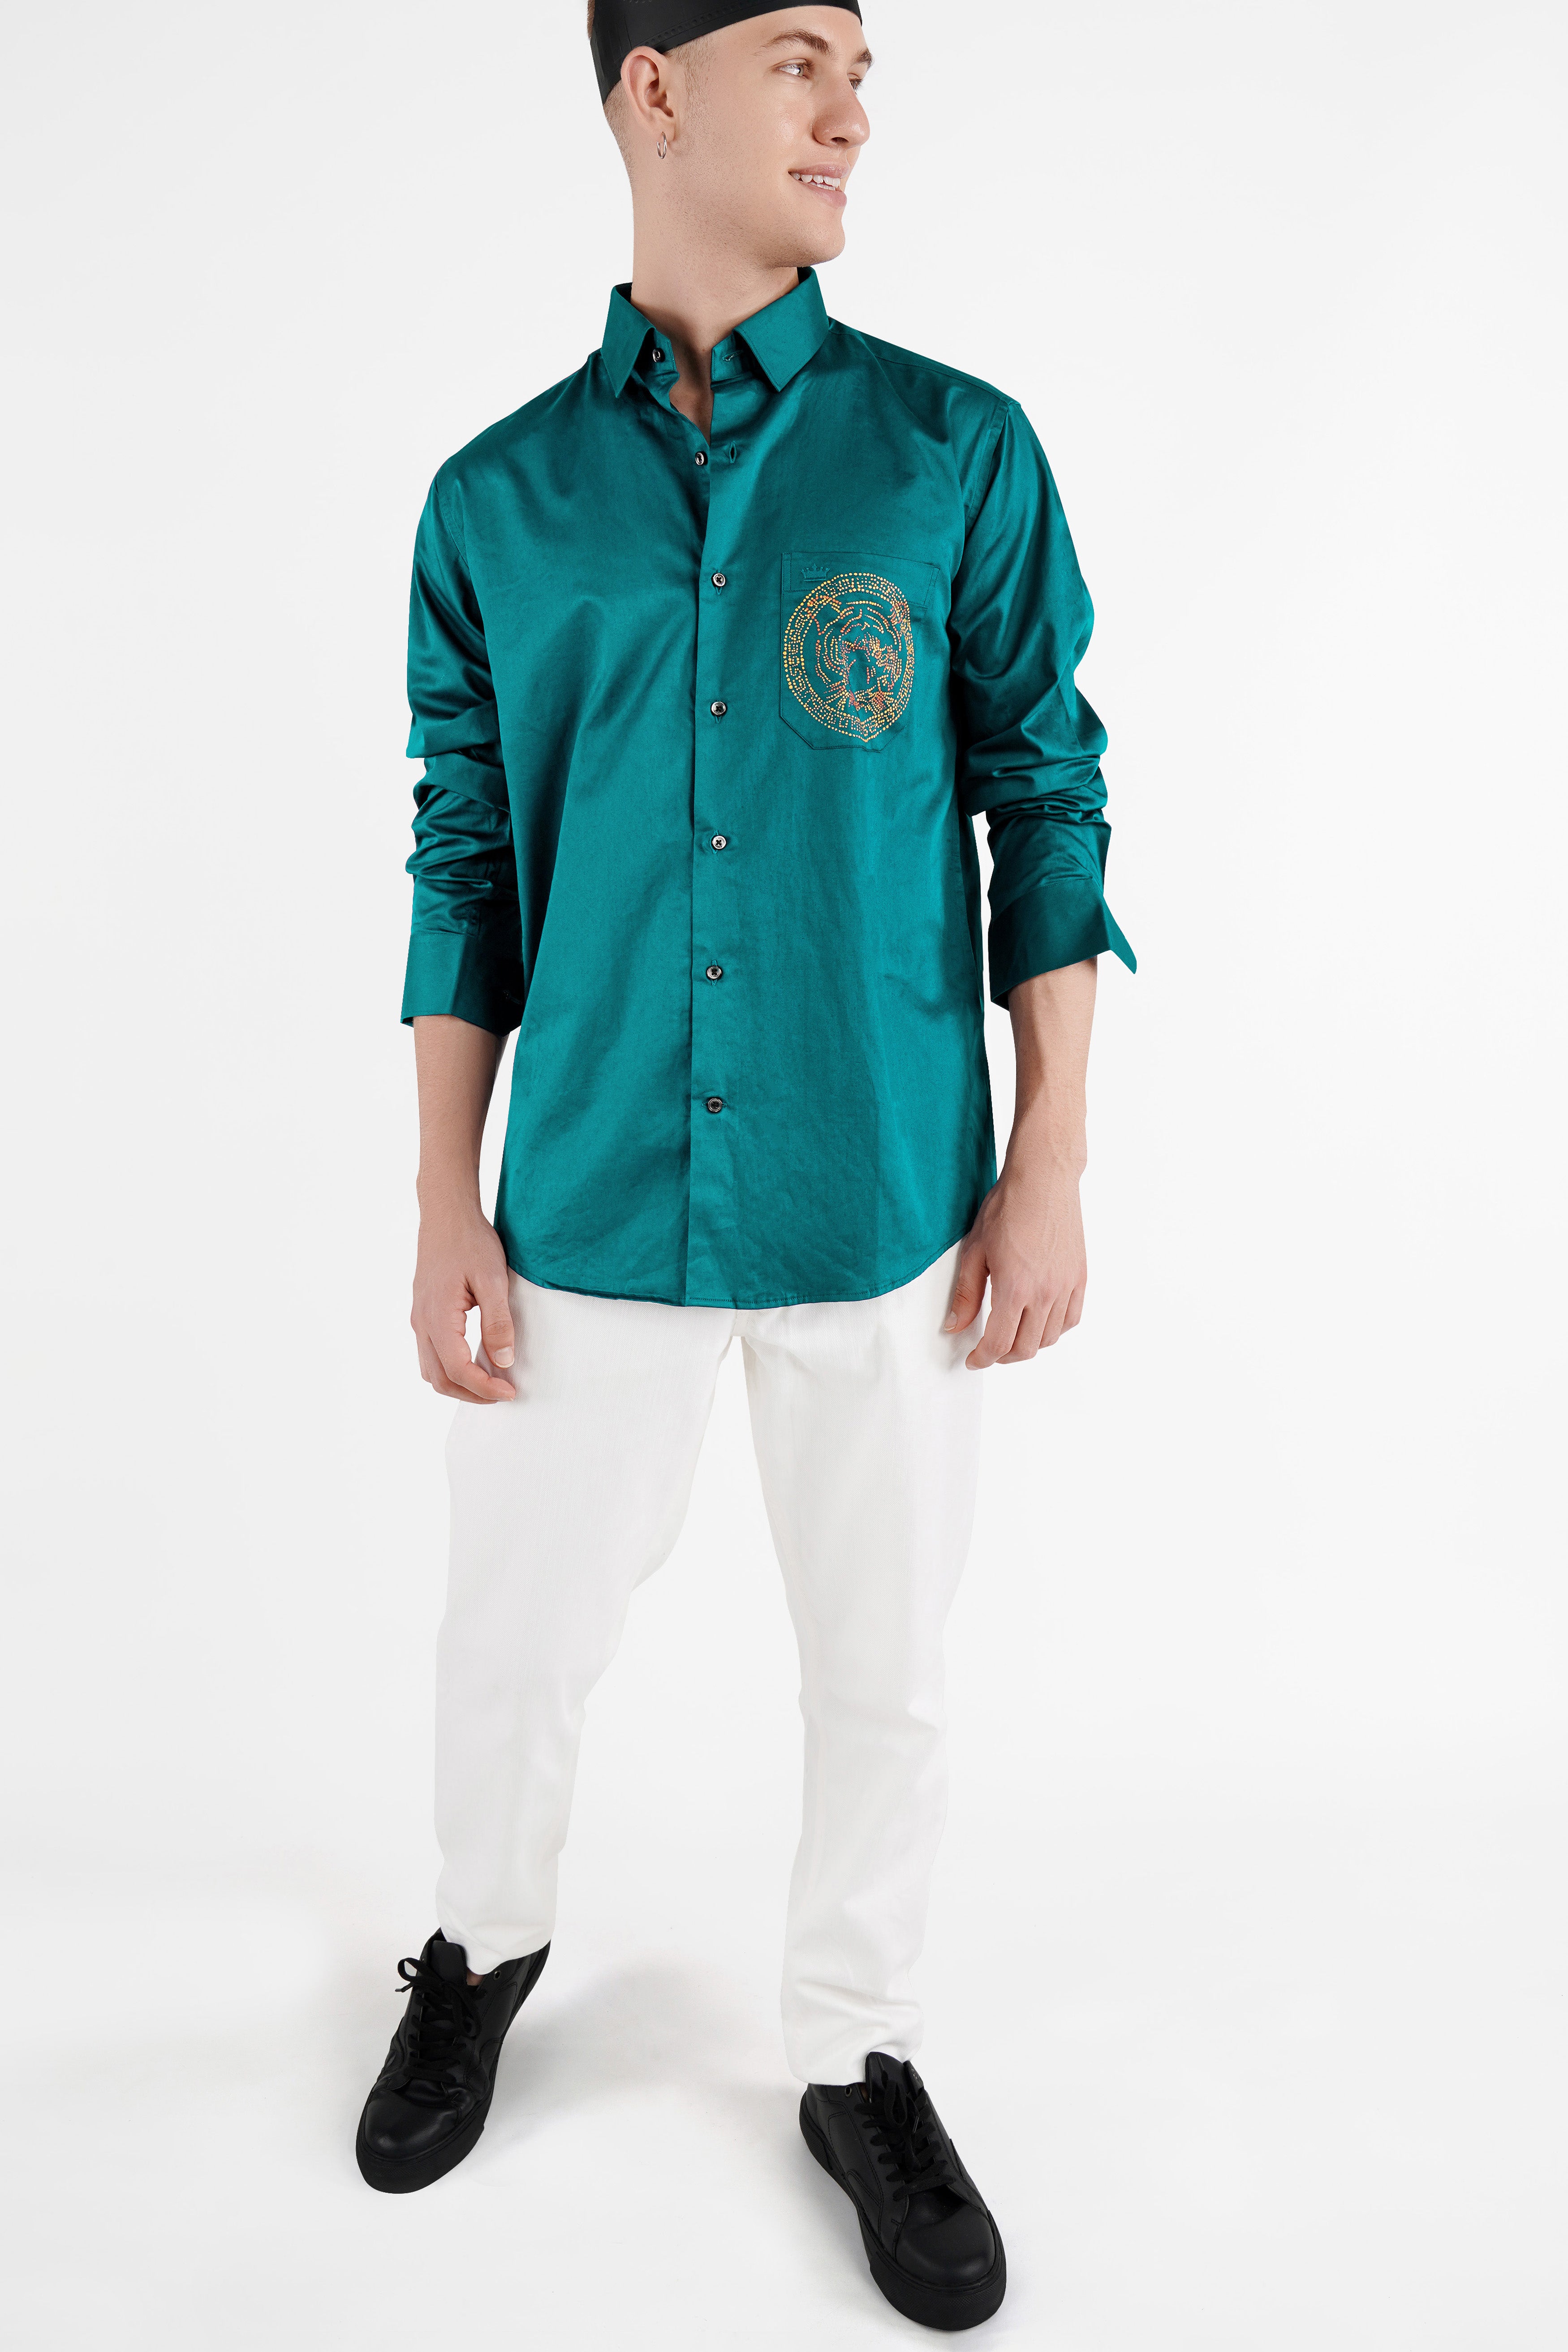 Sherpa Green Hand Painted Super Soft Premium Cotton Designer Shirt